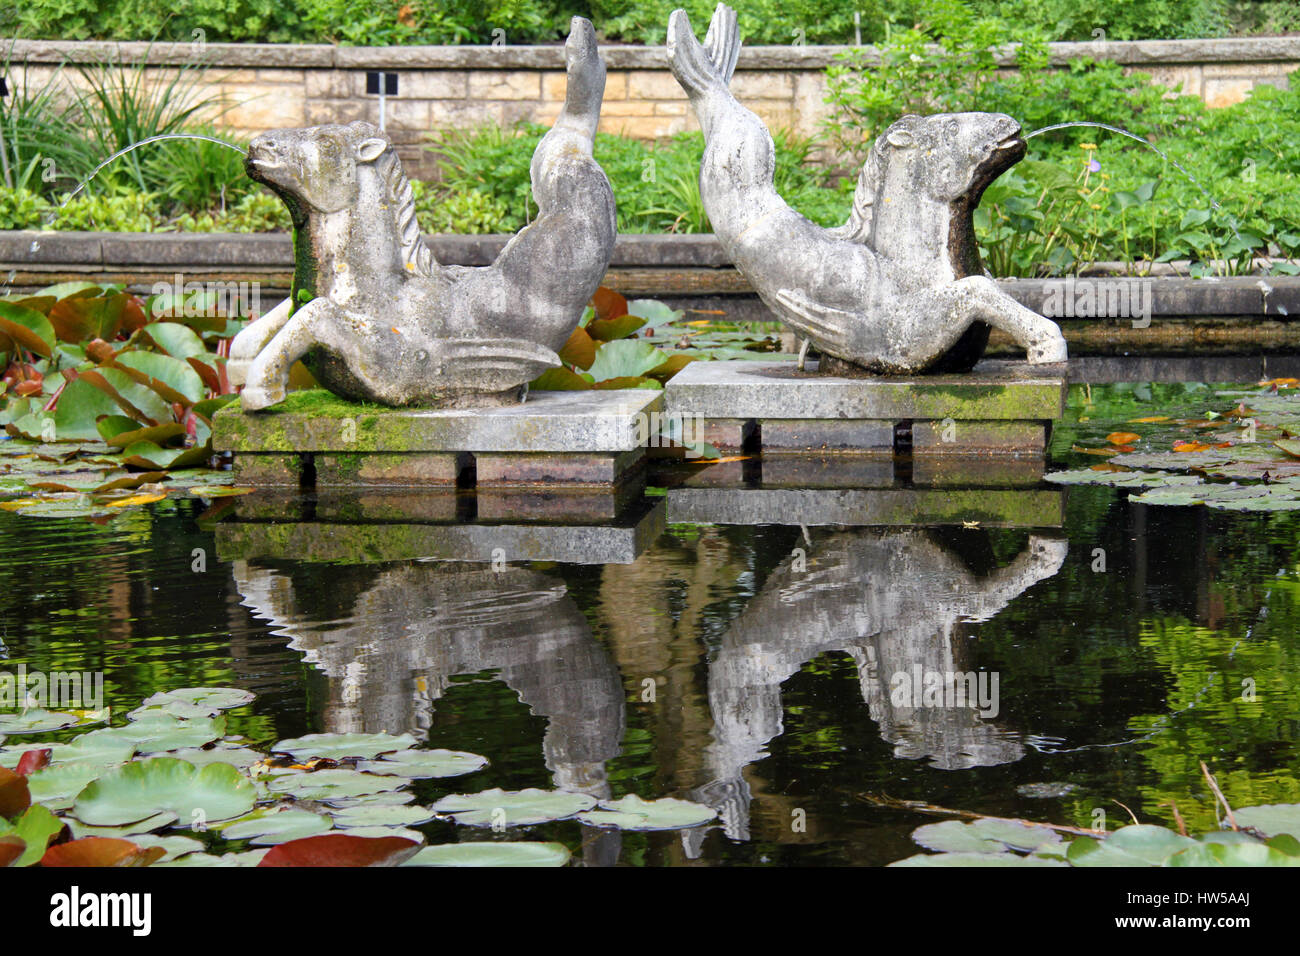 Botanical Garden - Palmengarten Frankfurt am Main, Germany - Waterlily  pond with gargoyle (water spout) -  May 2012 Stock Photo